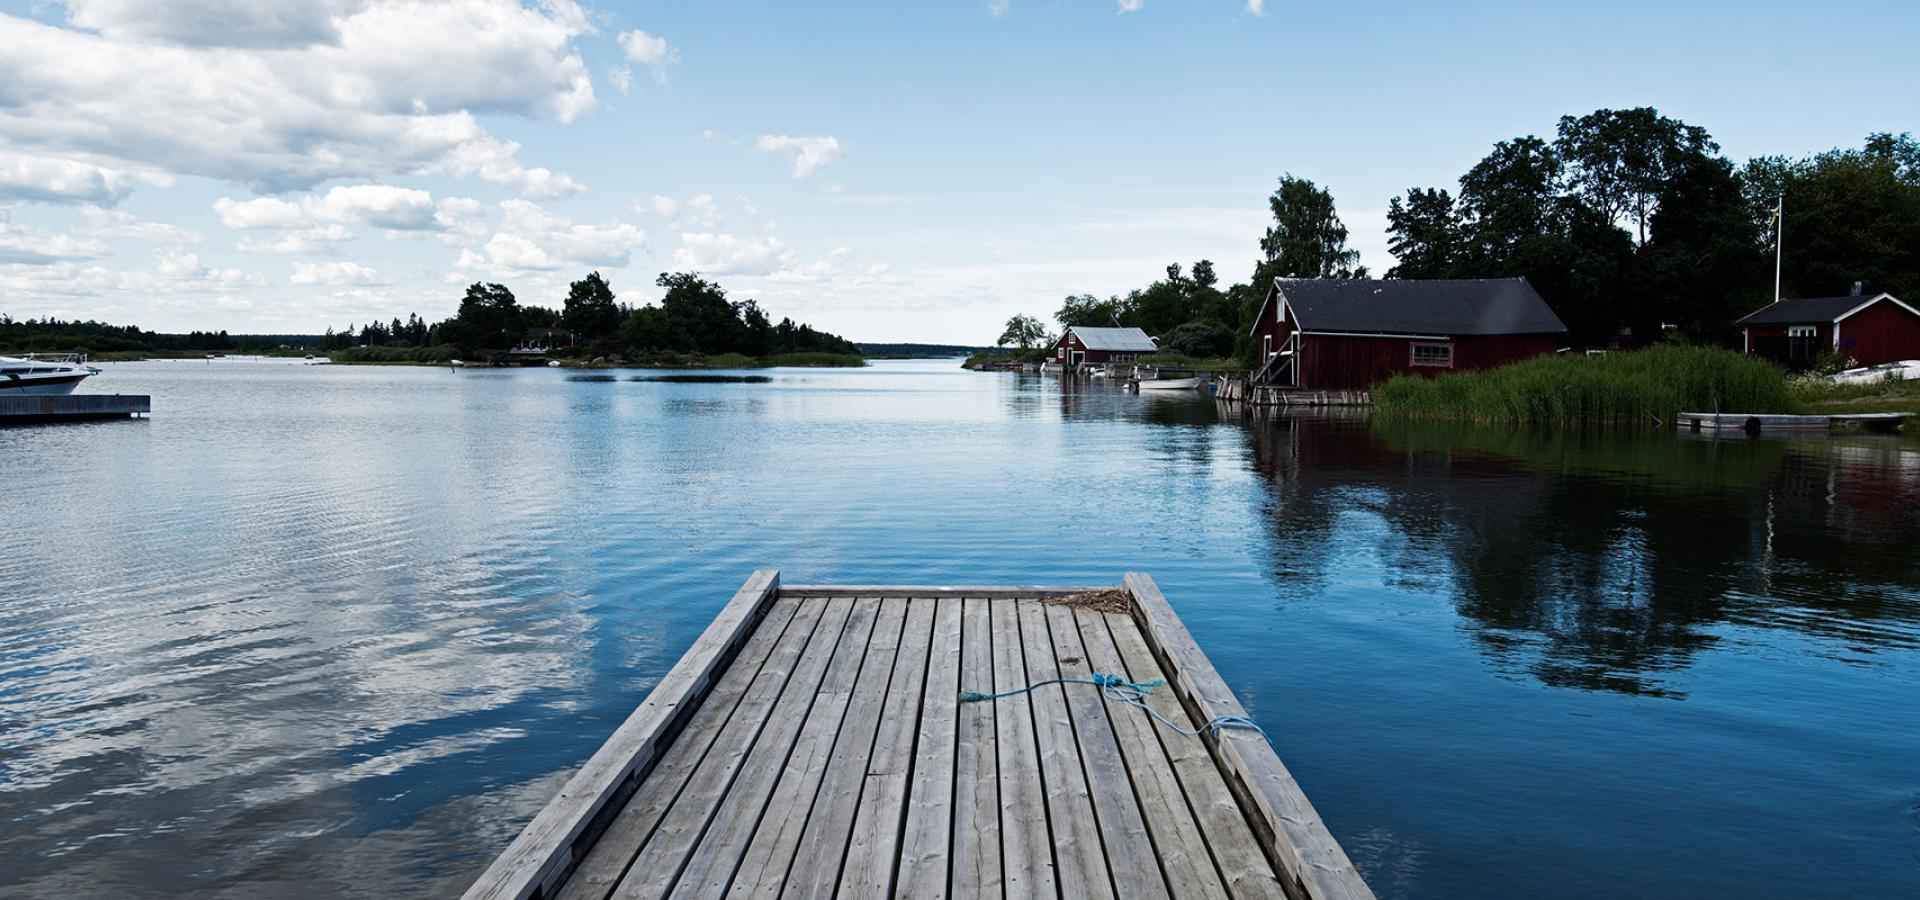 Limön island, Gävle